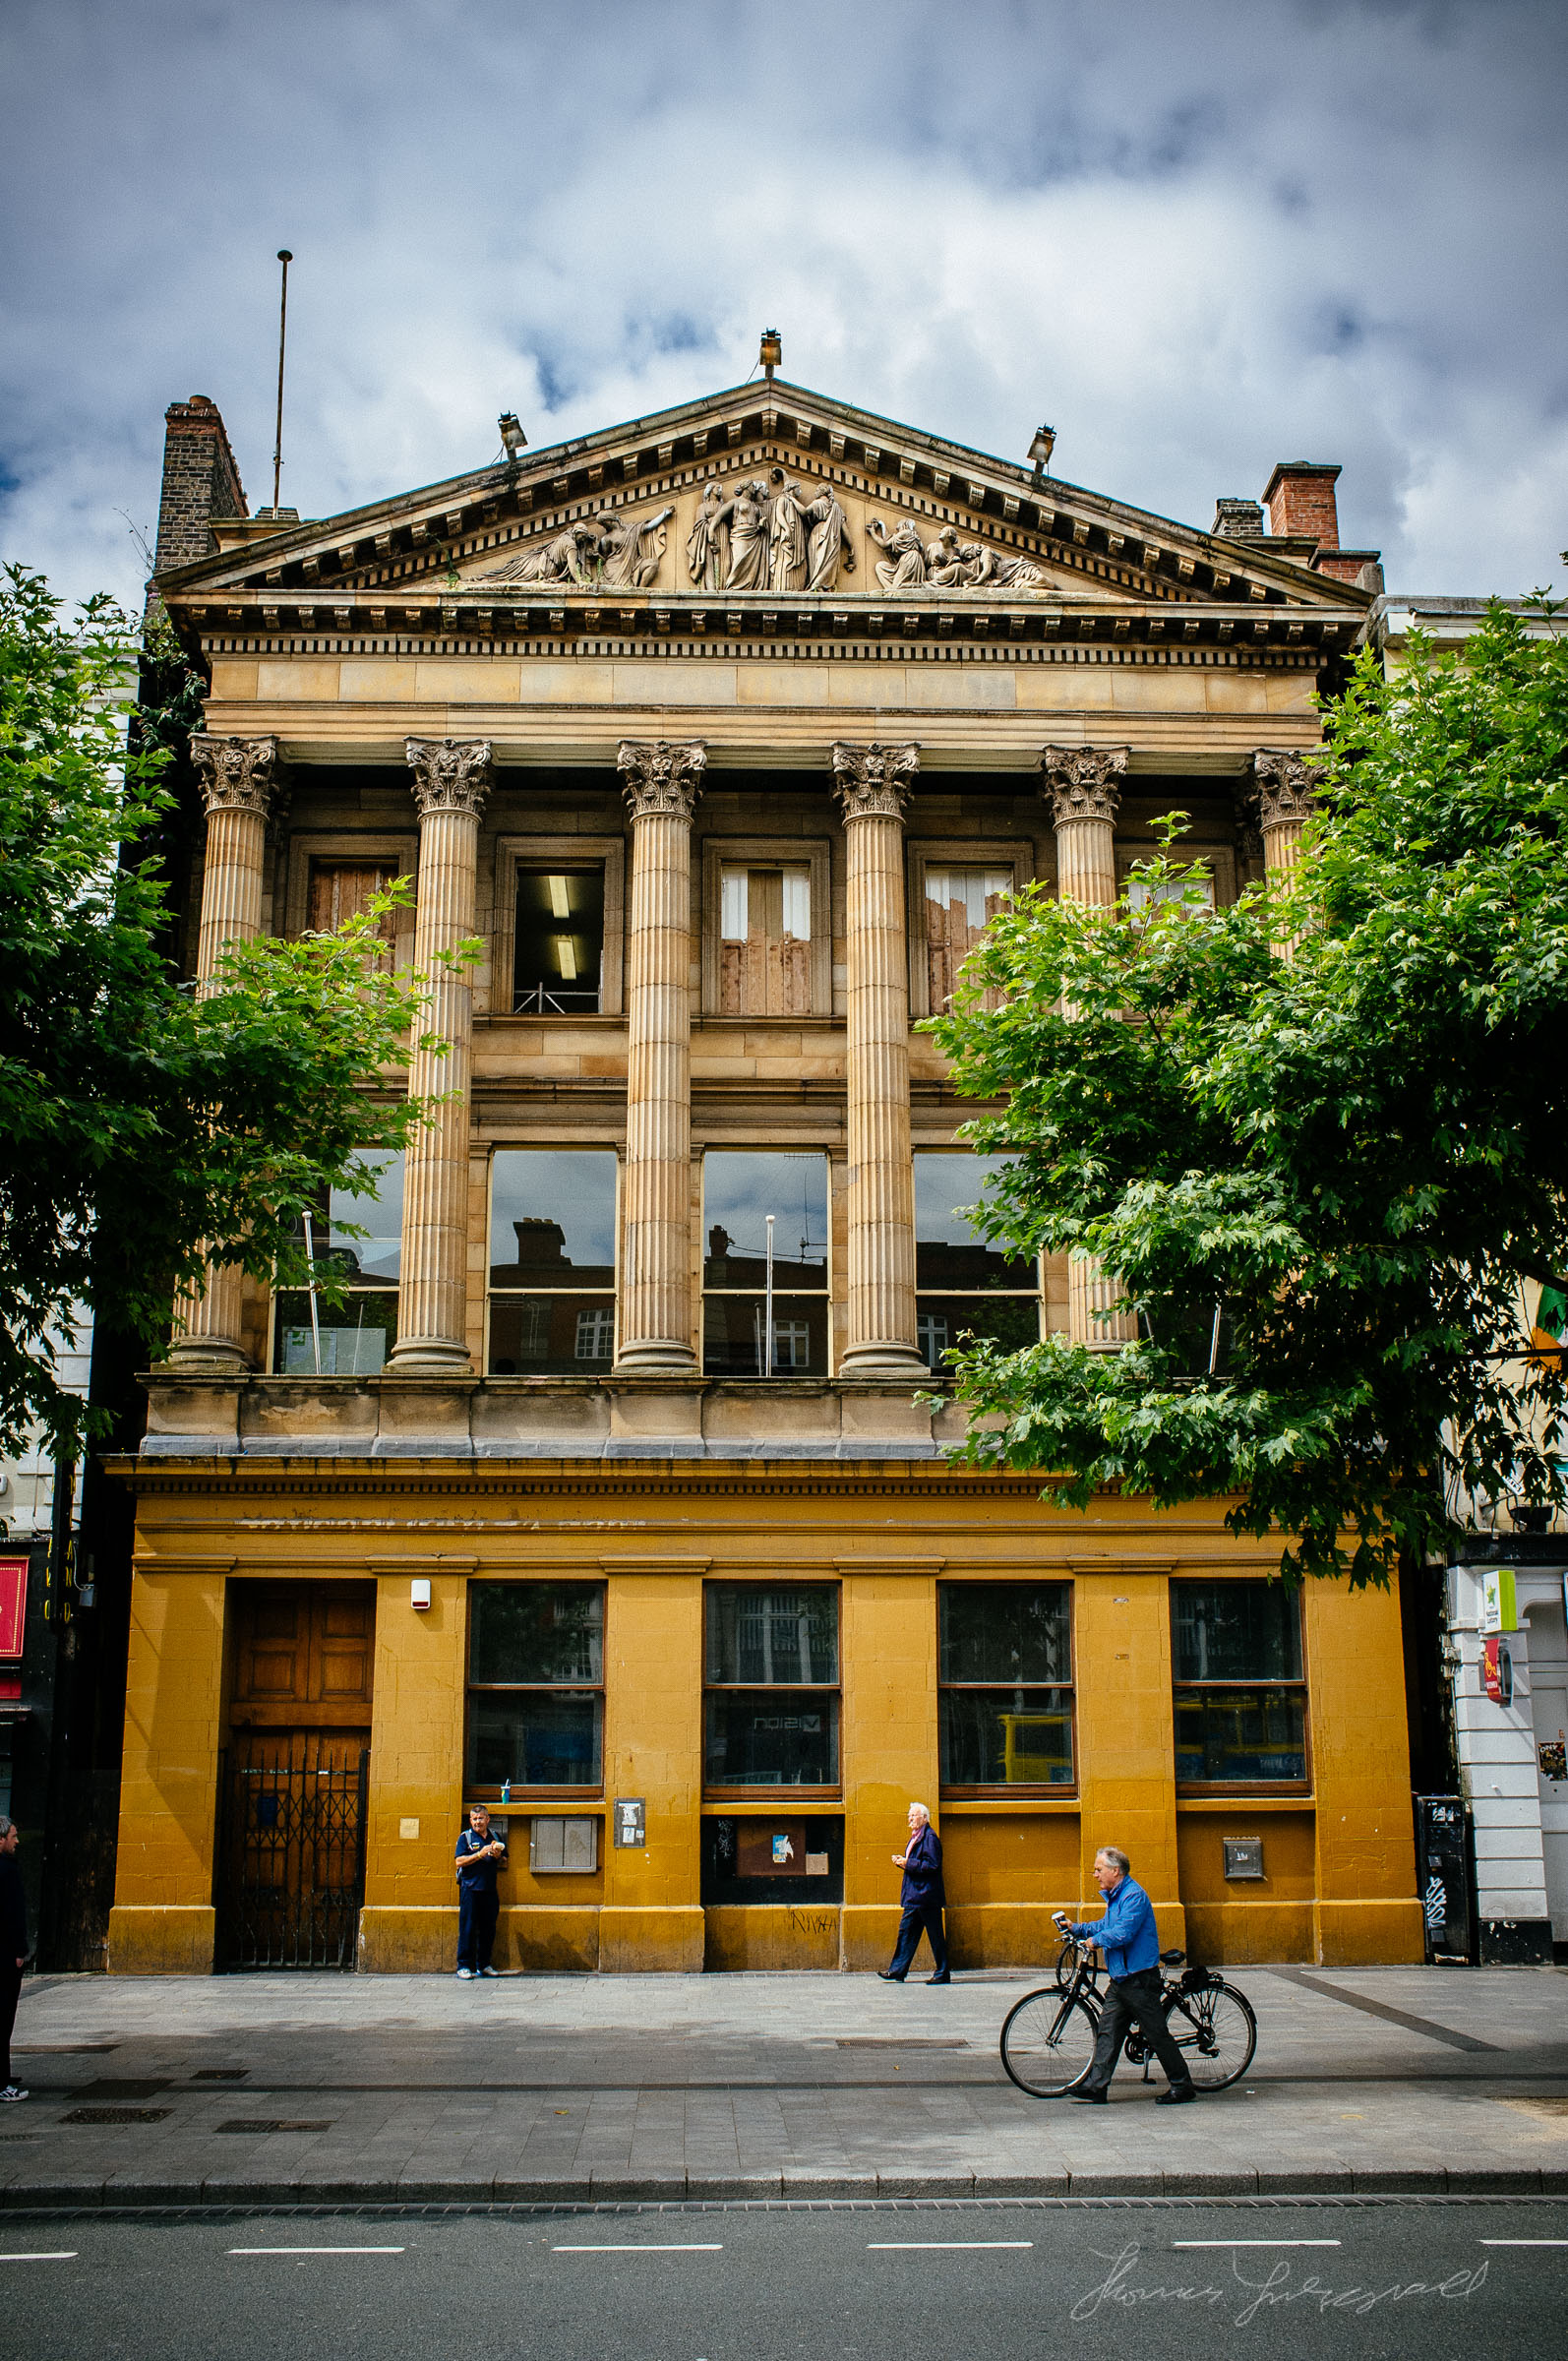 An old building on Dublin's O'Connell Street